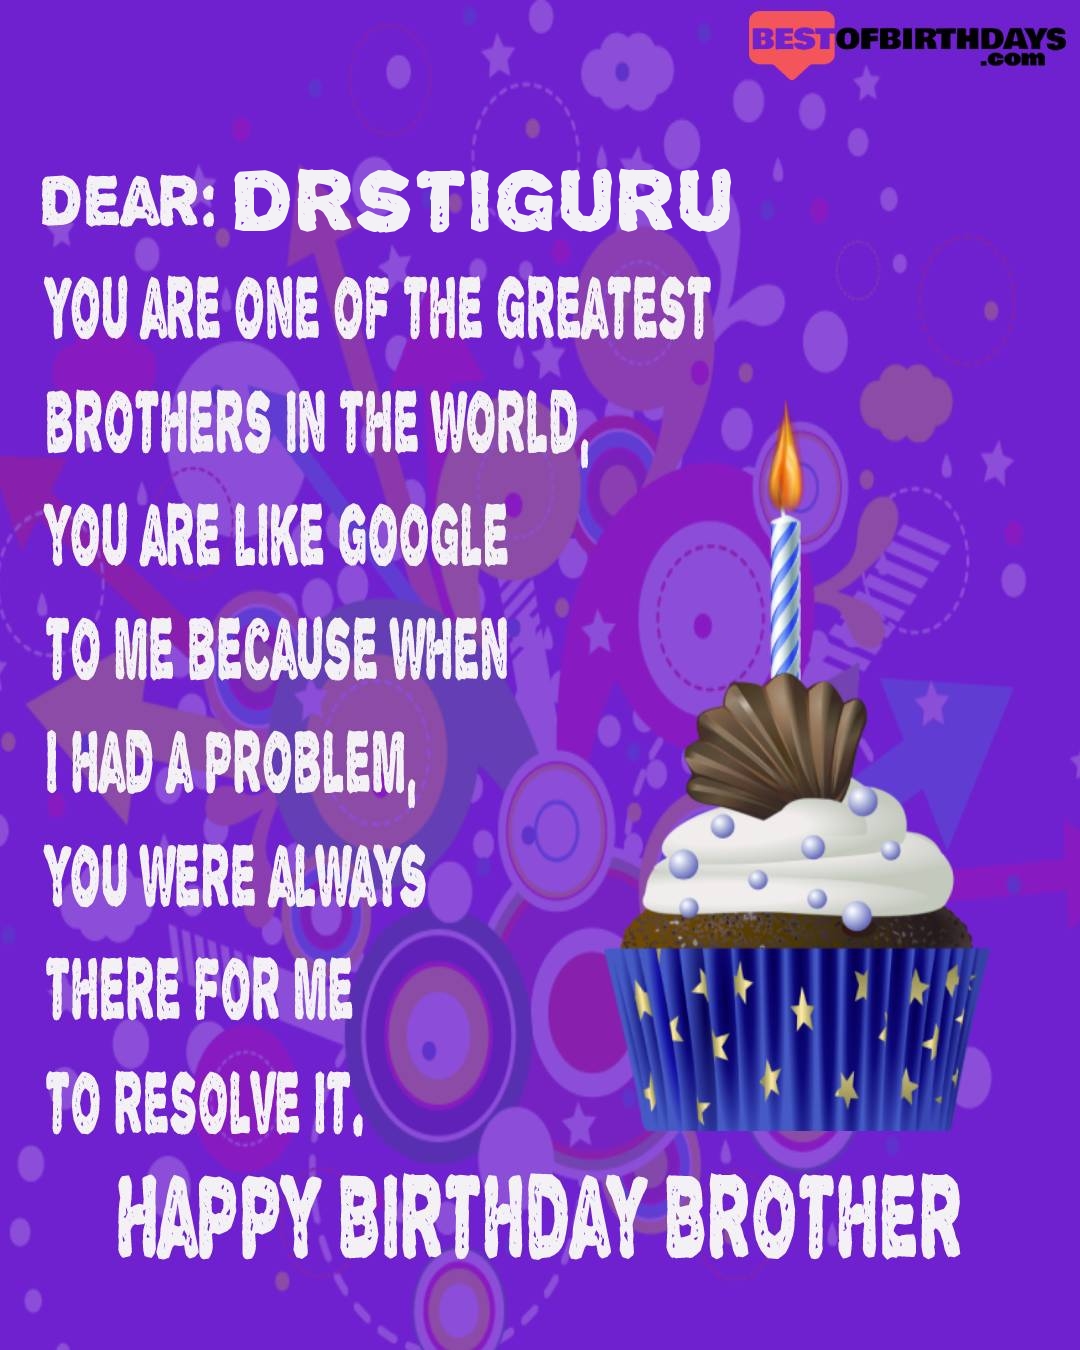 Happy birthday drstiguru bhai brother bro